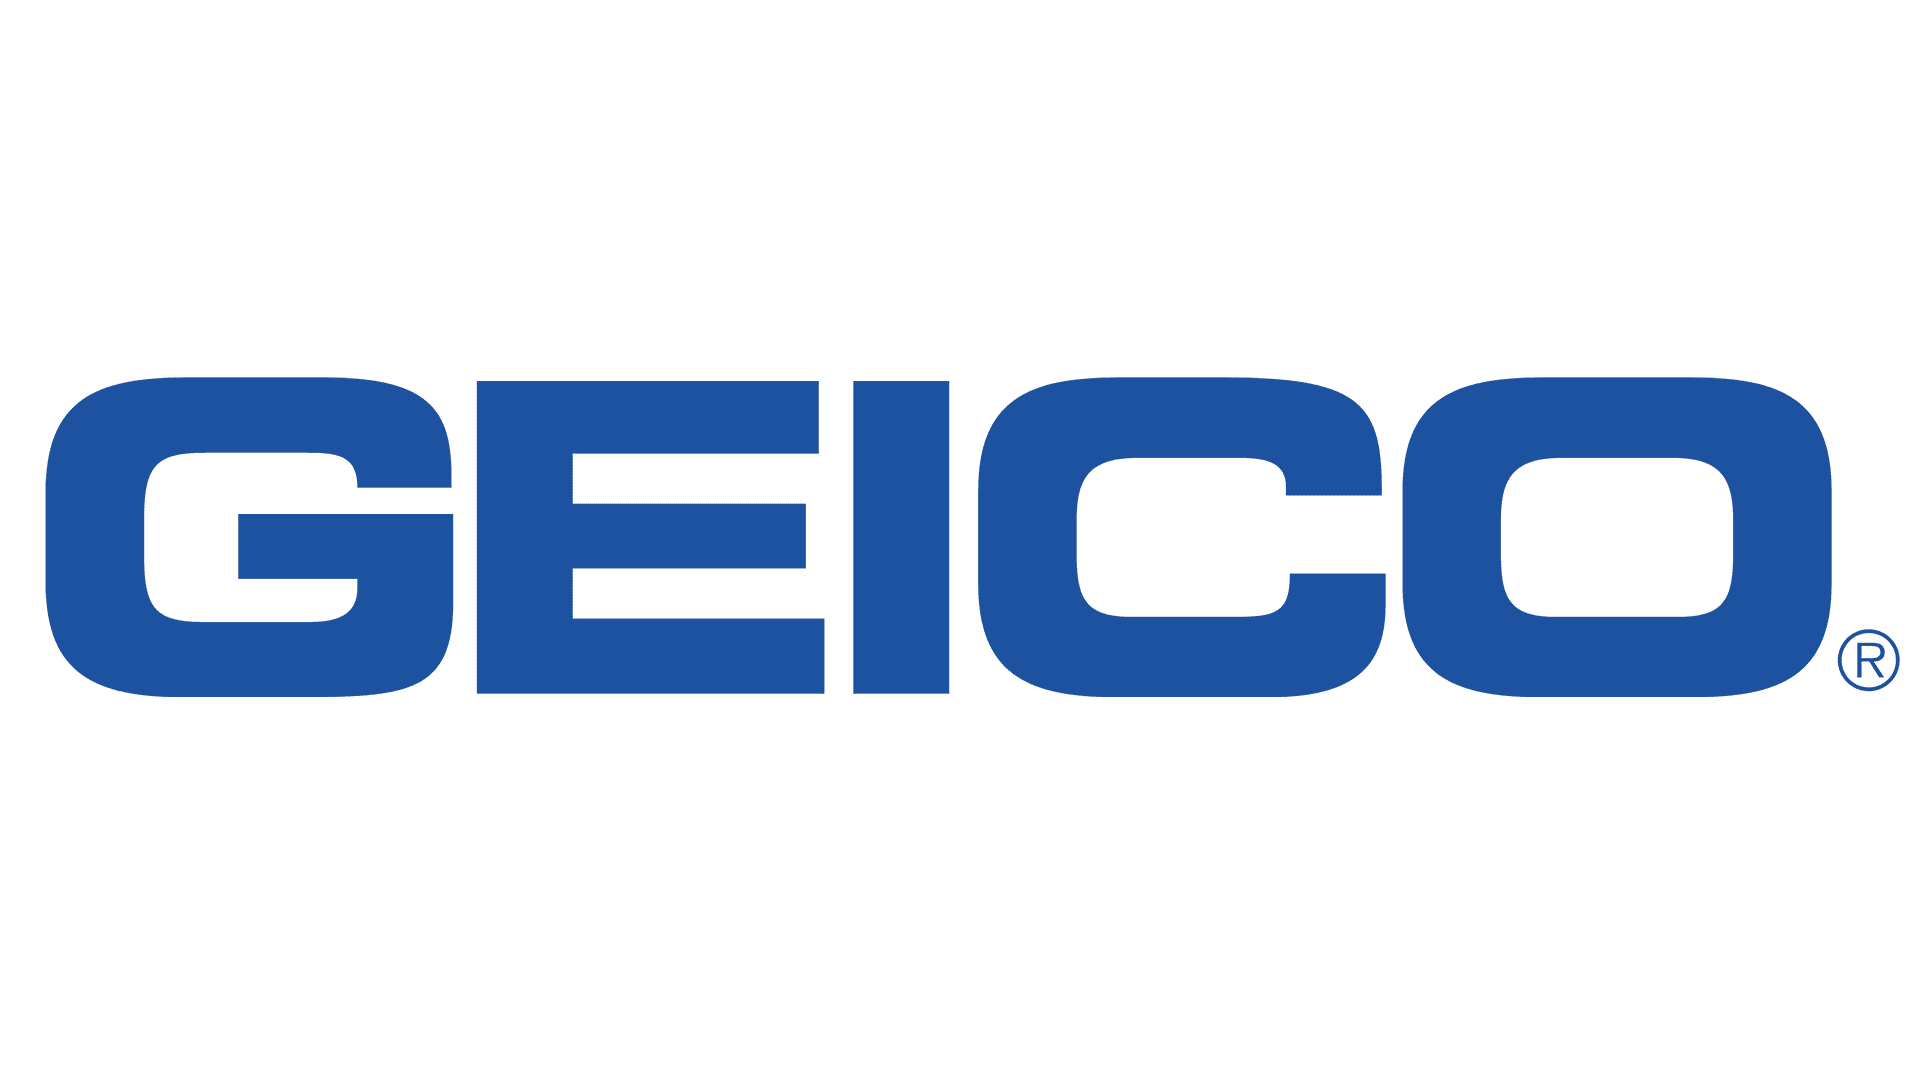 GEICO Logo